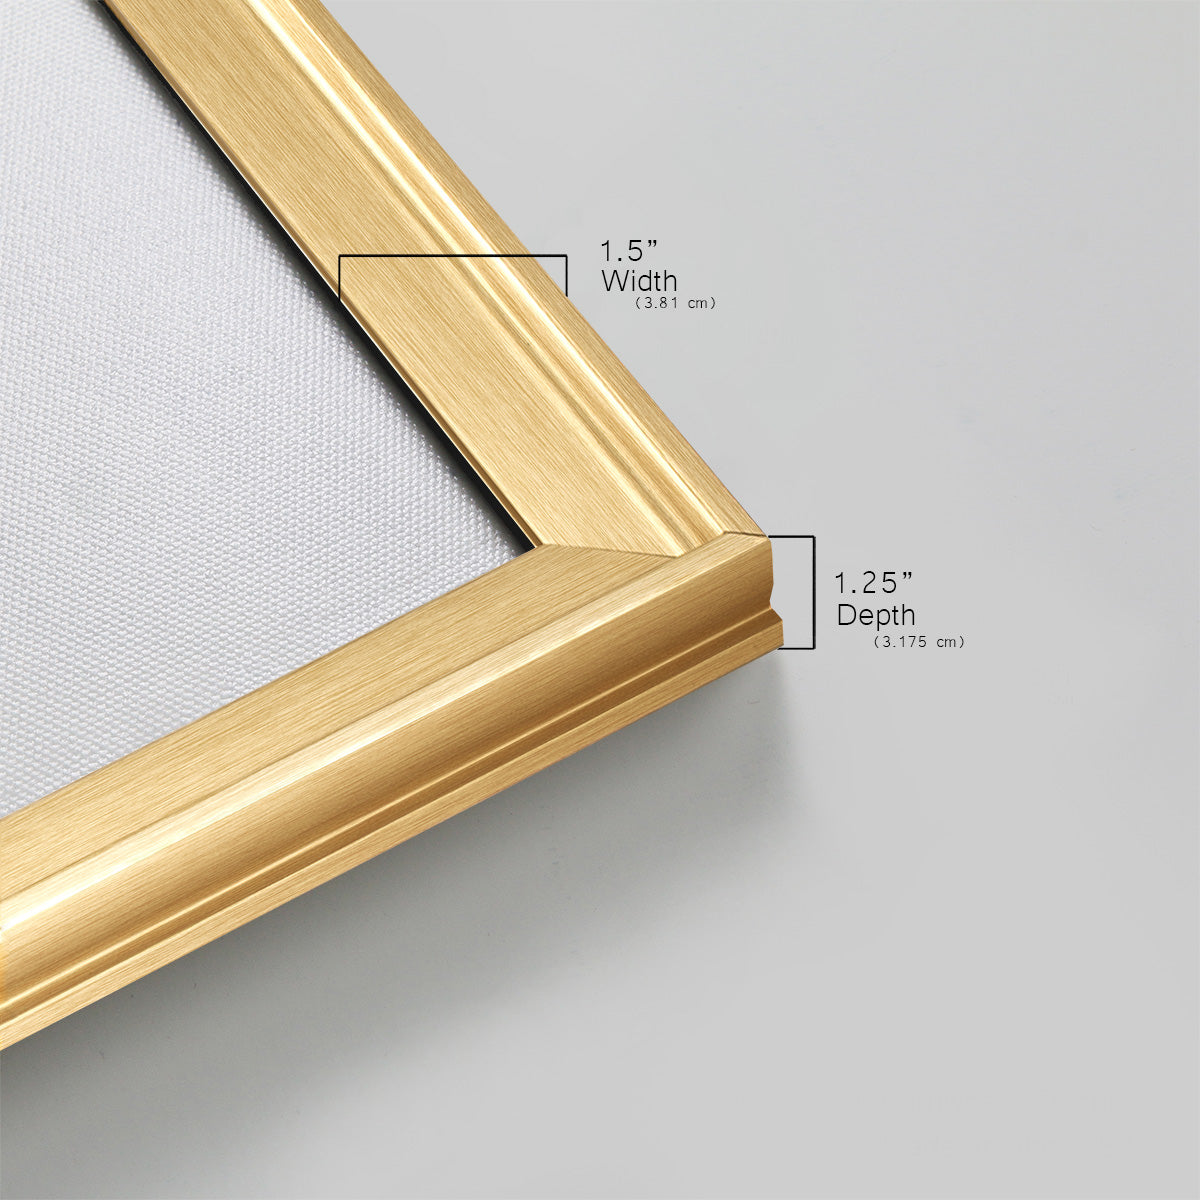 Golden Light Pathways II Premium Framed Print - Ready to Hang